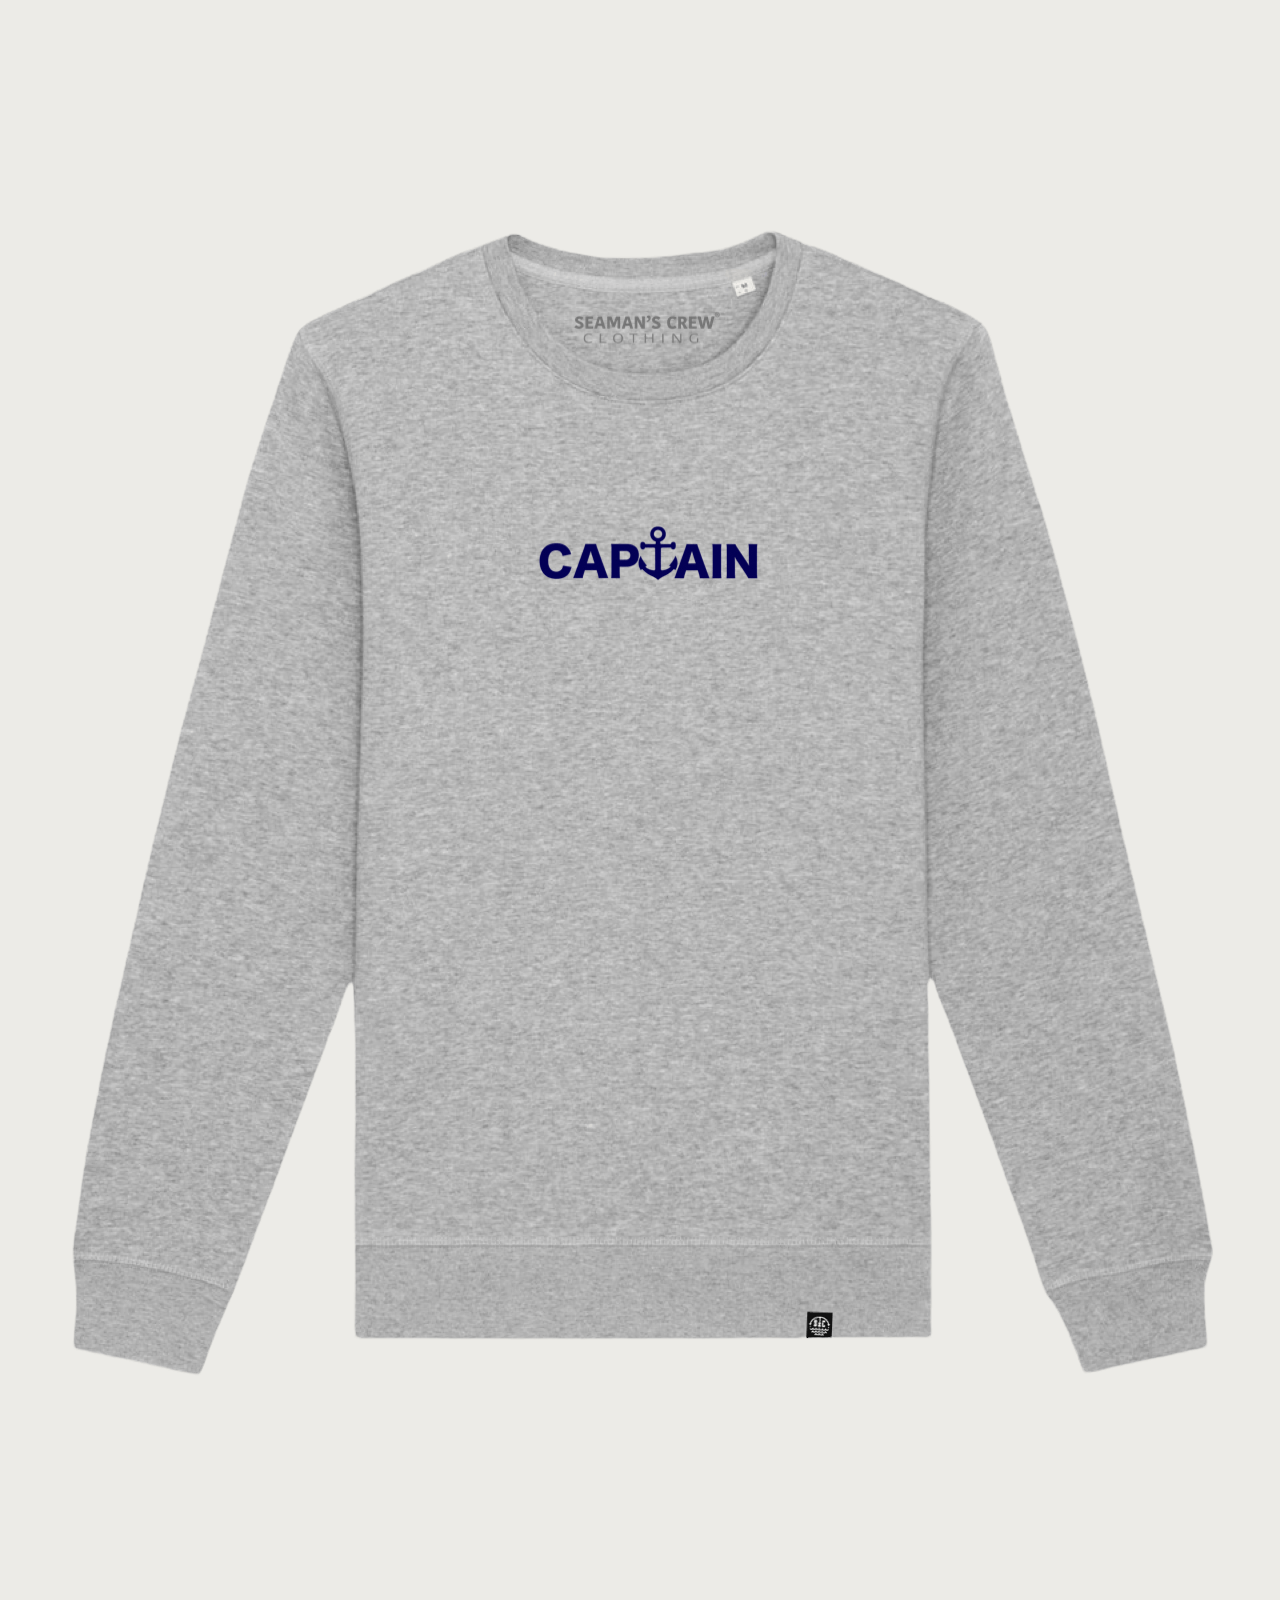 Captain Sweatshirt - Seaman&